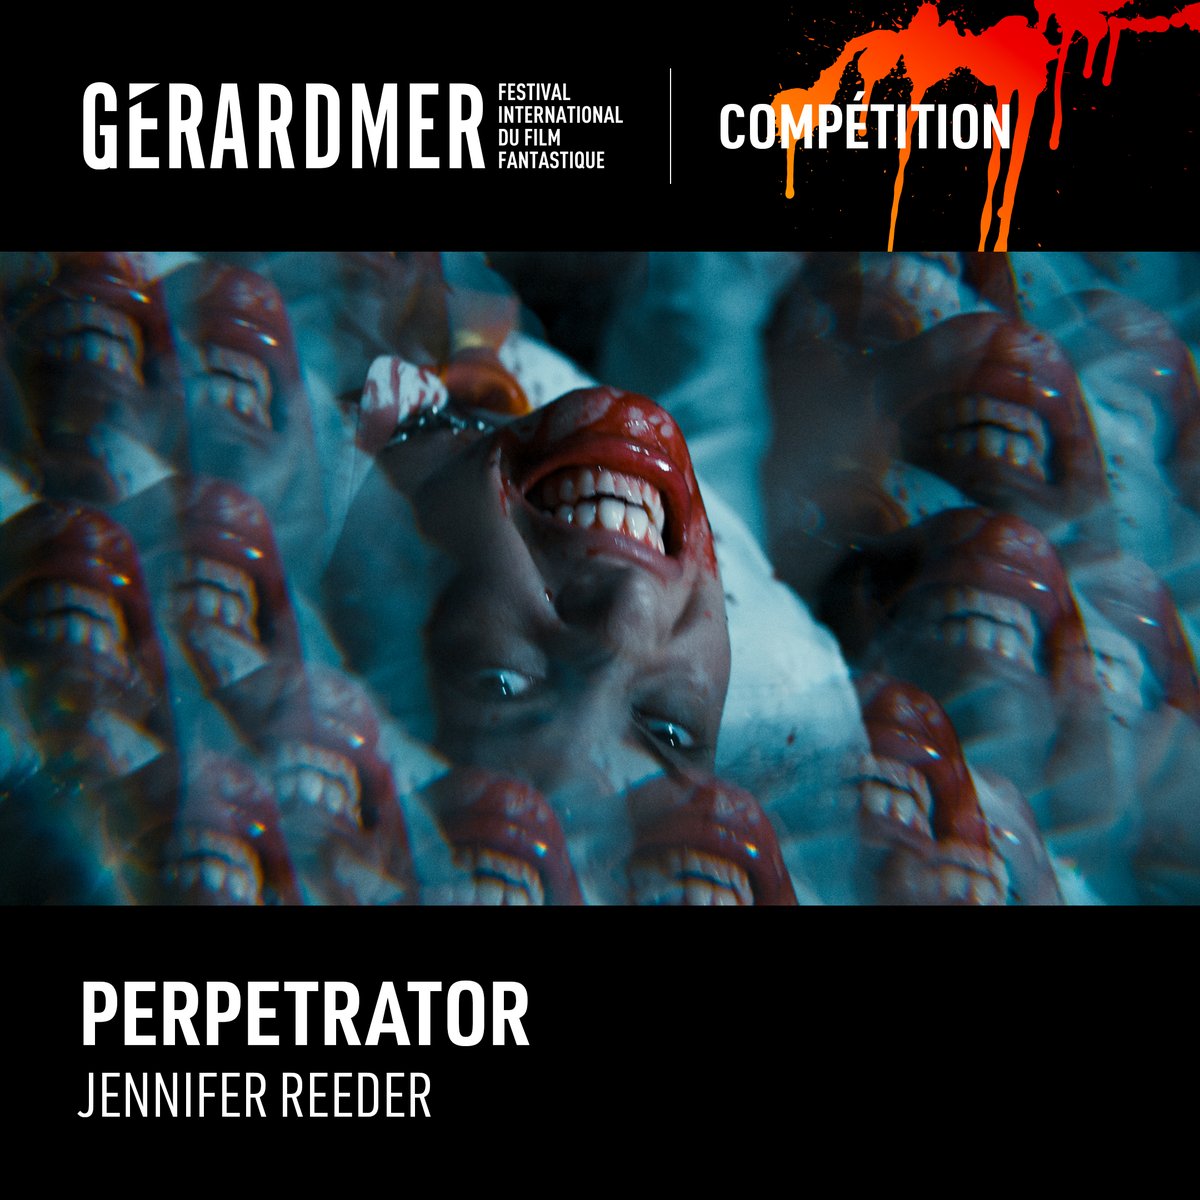 📌 JOUR 2 : 11h00 - En compétition #Perpetrator de @JenniferReeder (USA)